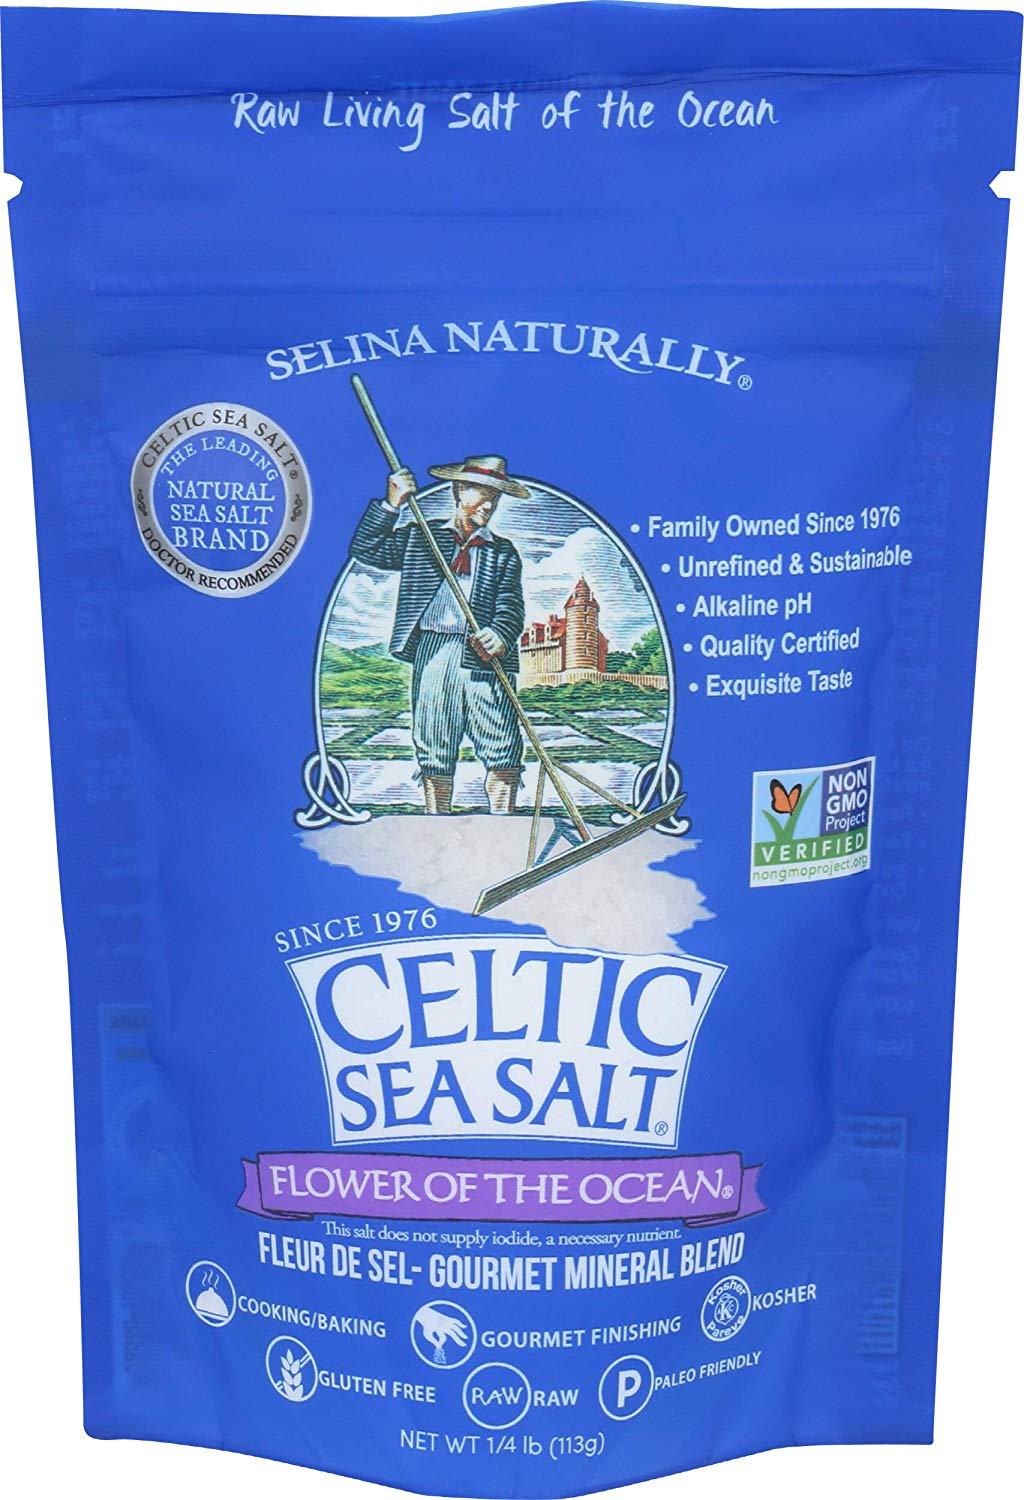 Selina Naturally Celtic Sea Salt Flower of the Ocean FLEUR de SEL 113g